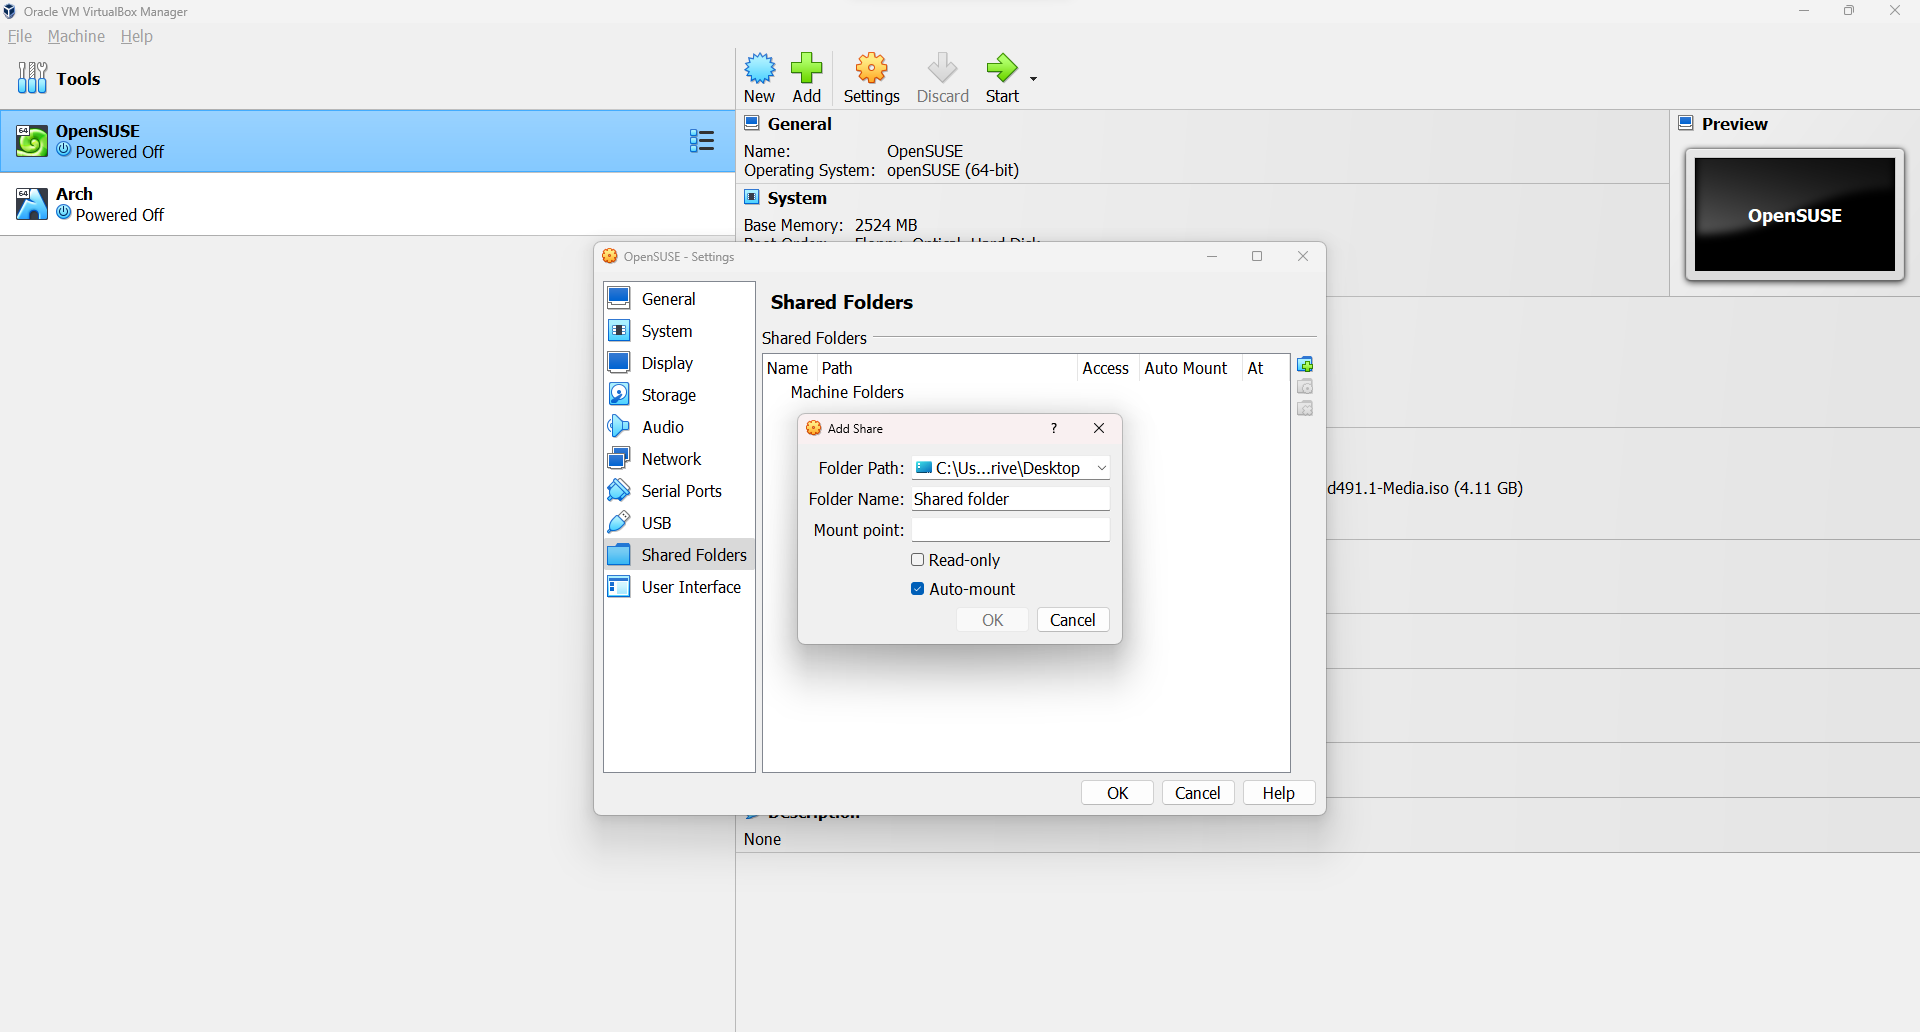 Shared folder settings on VirtualBox